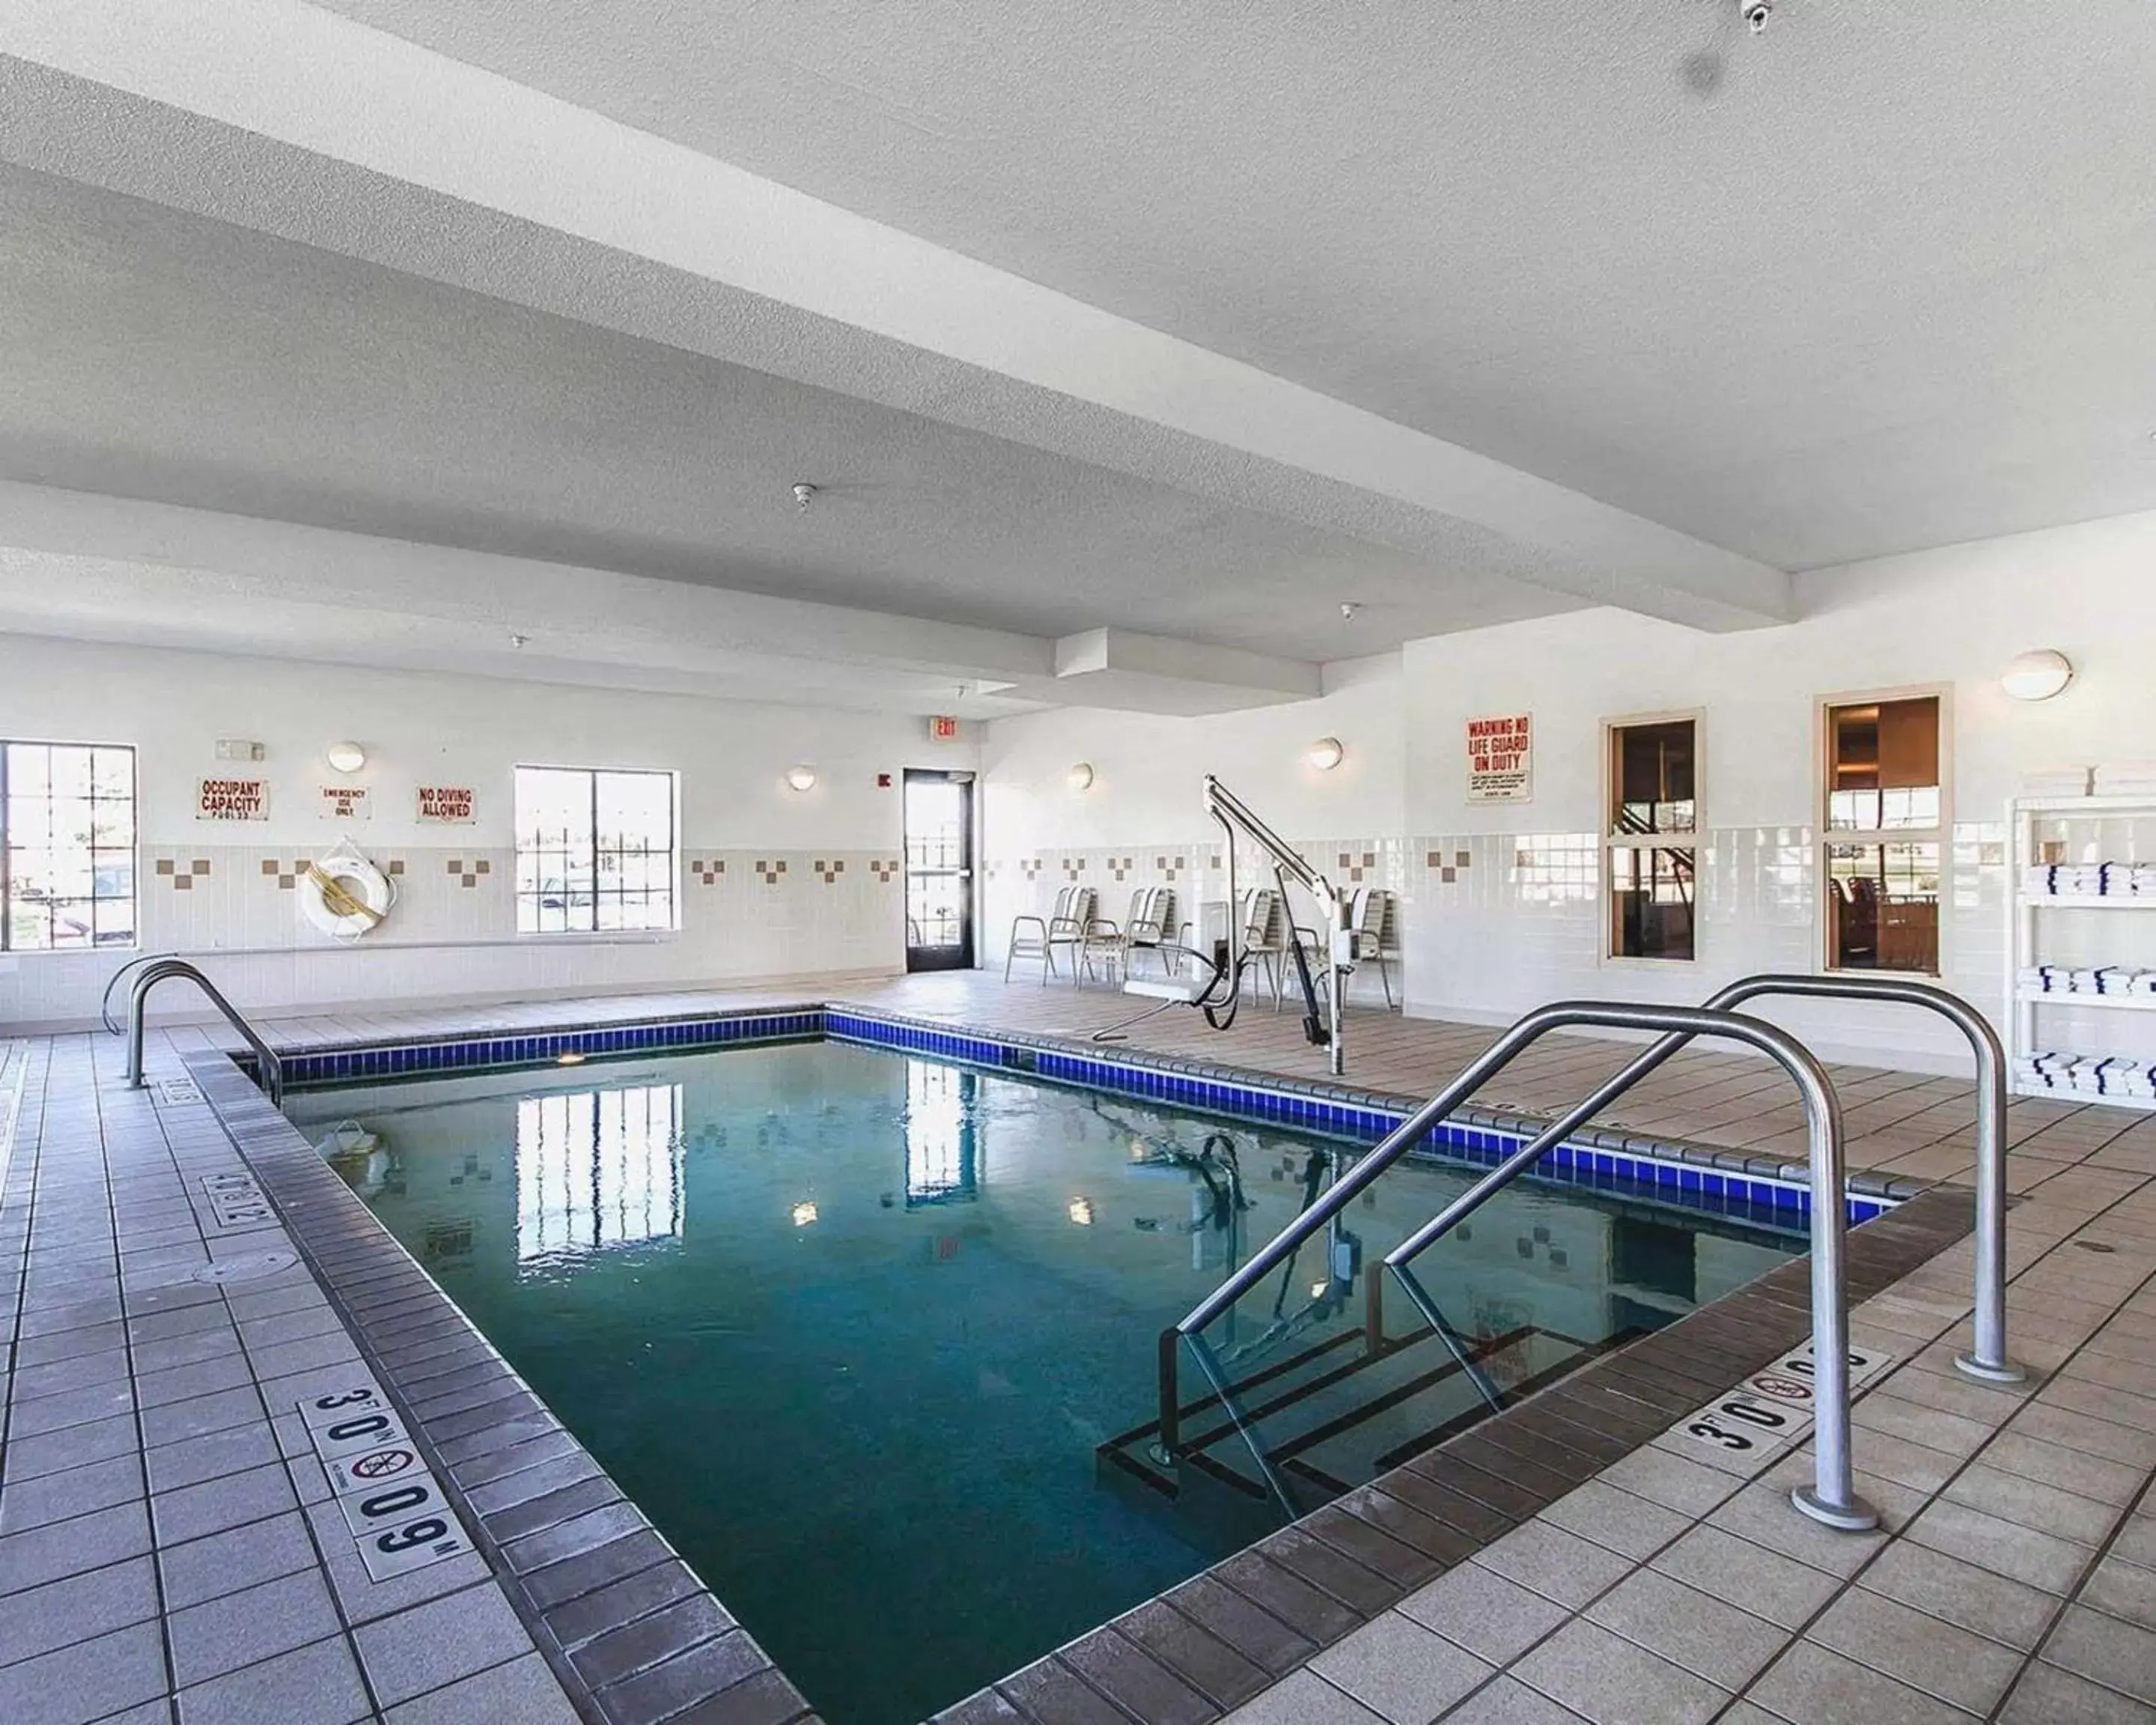 On site, Swimming Pool in Comfort Inn Owatonna near Medical Center